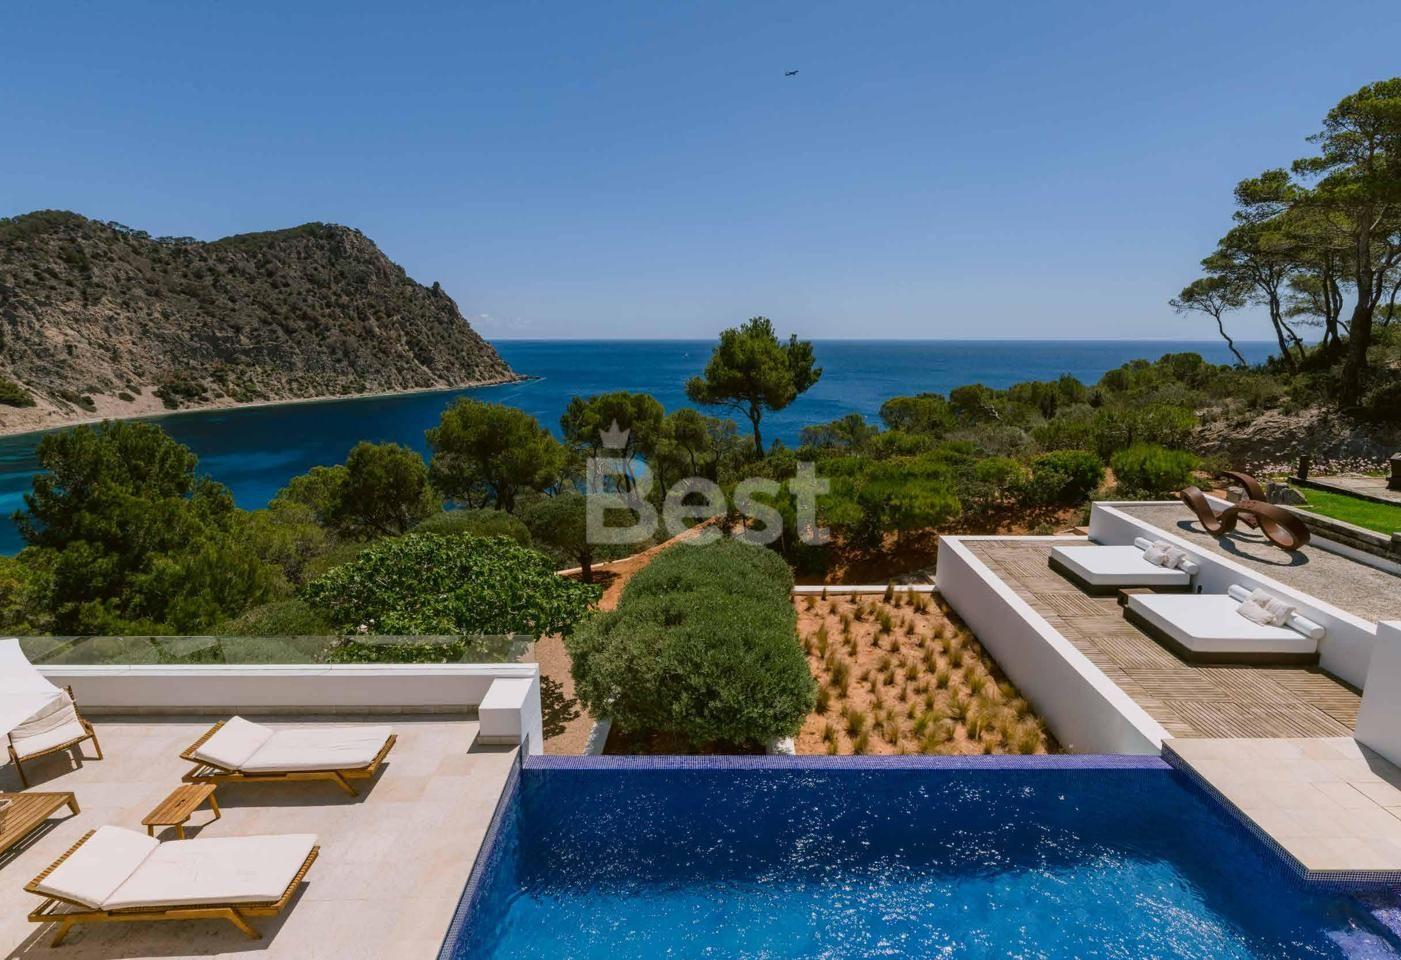 House with sea views for rent in Santa Eulalia, Ibiza REF: CASA SOFIA